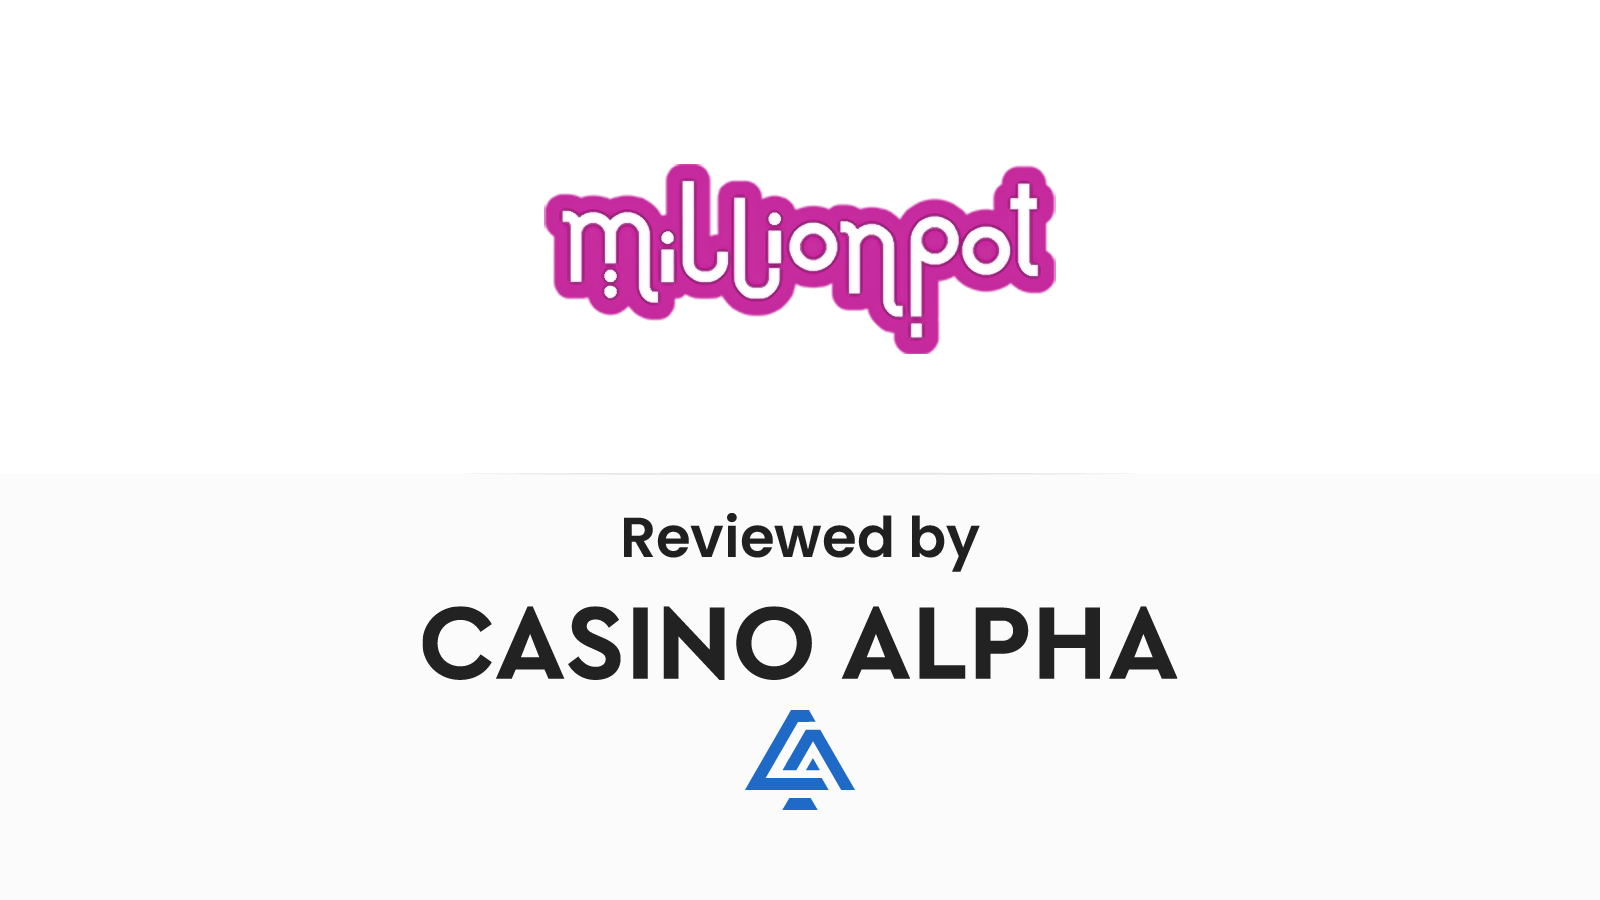 Millionpot Review & Offers